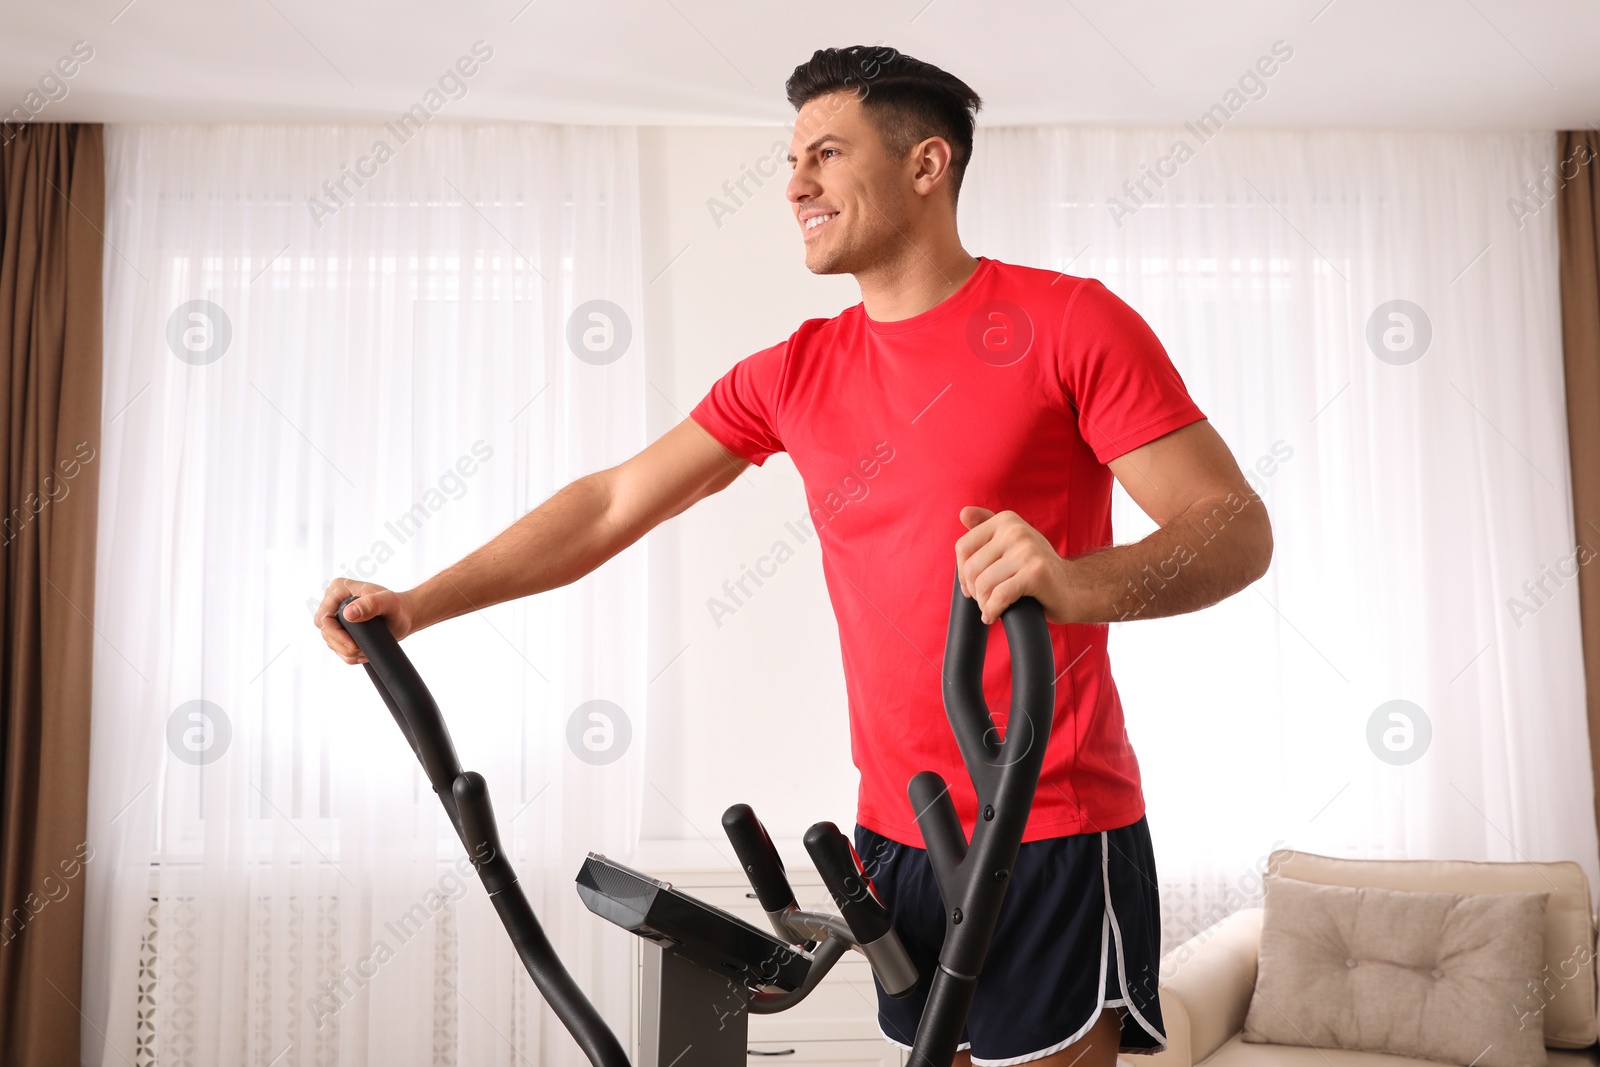 Photo of Man using modern elliptical machine at home